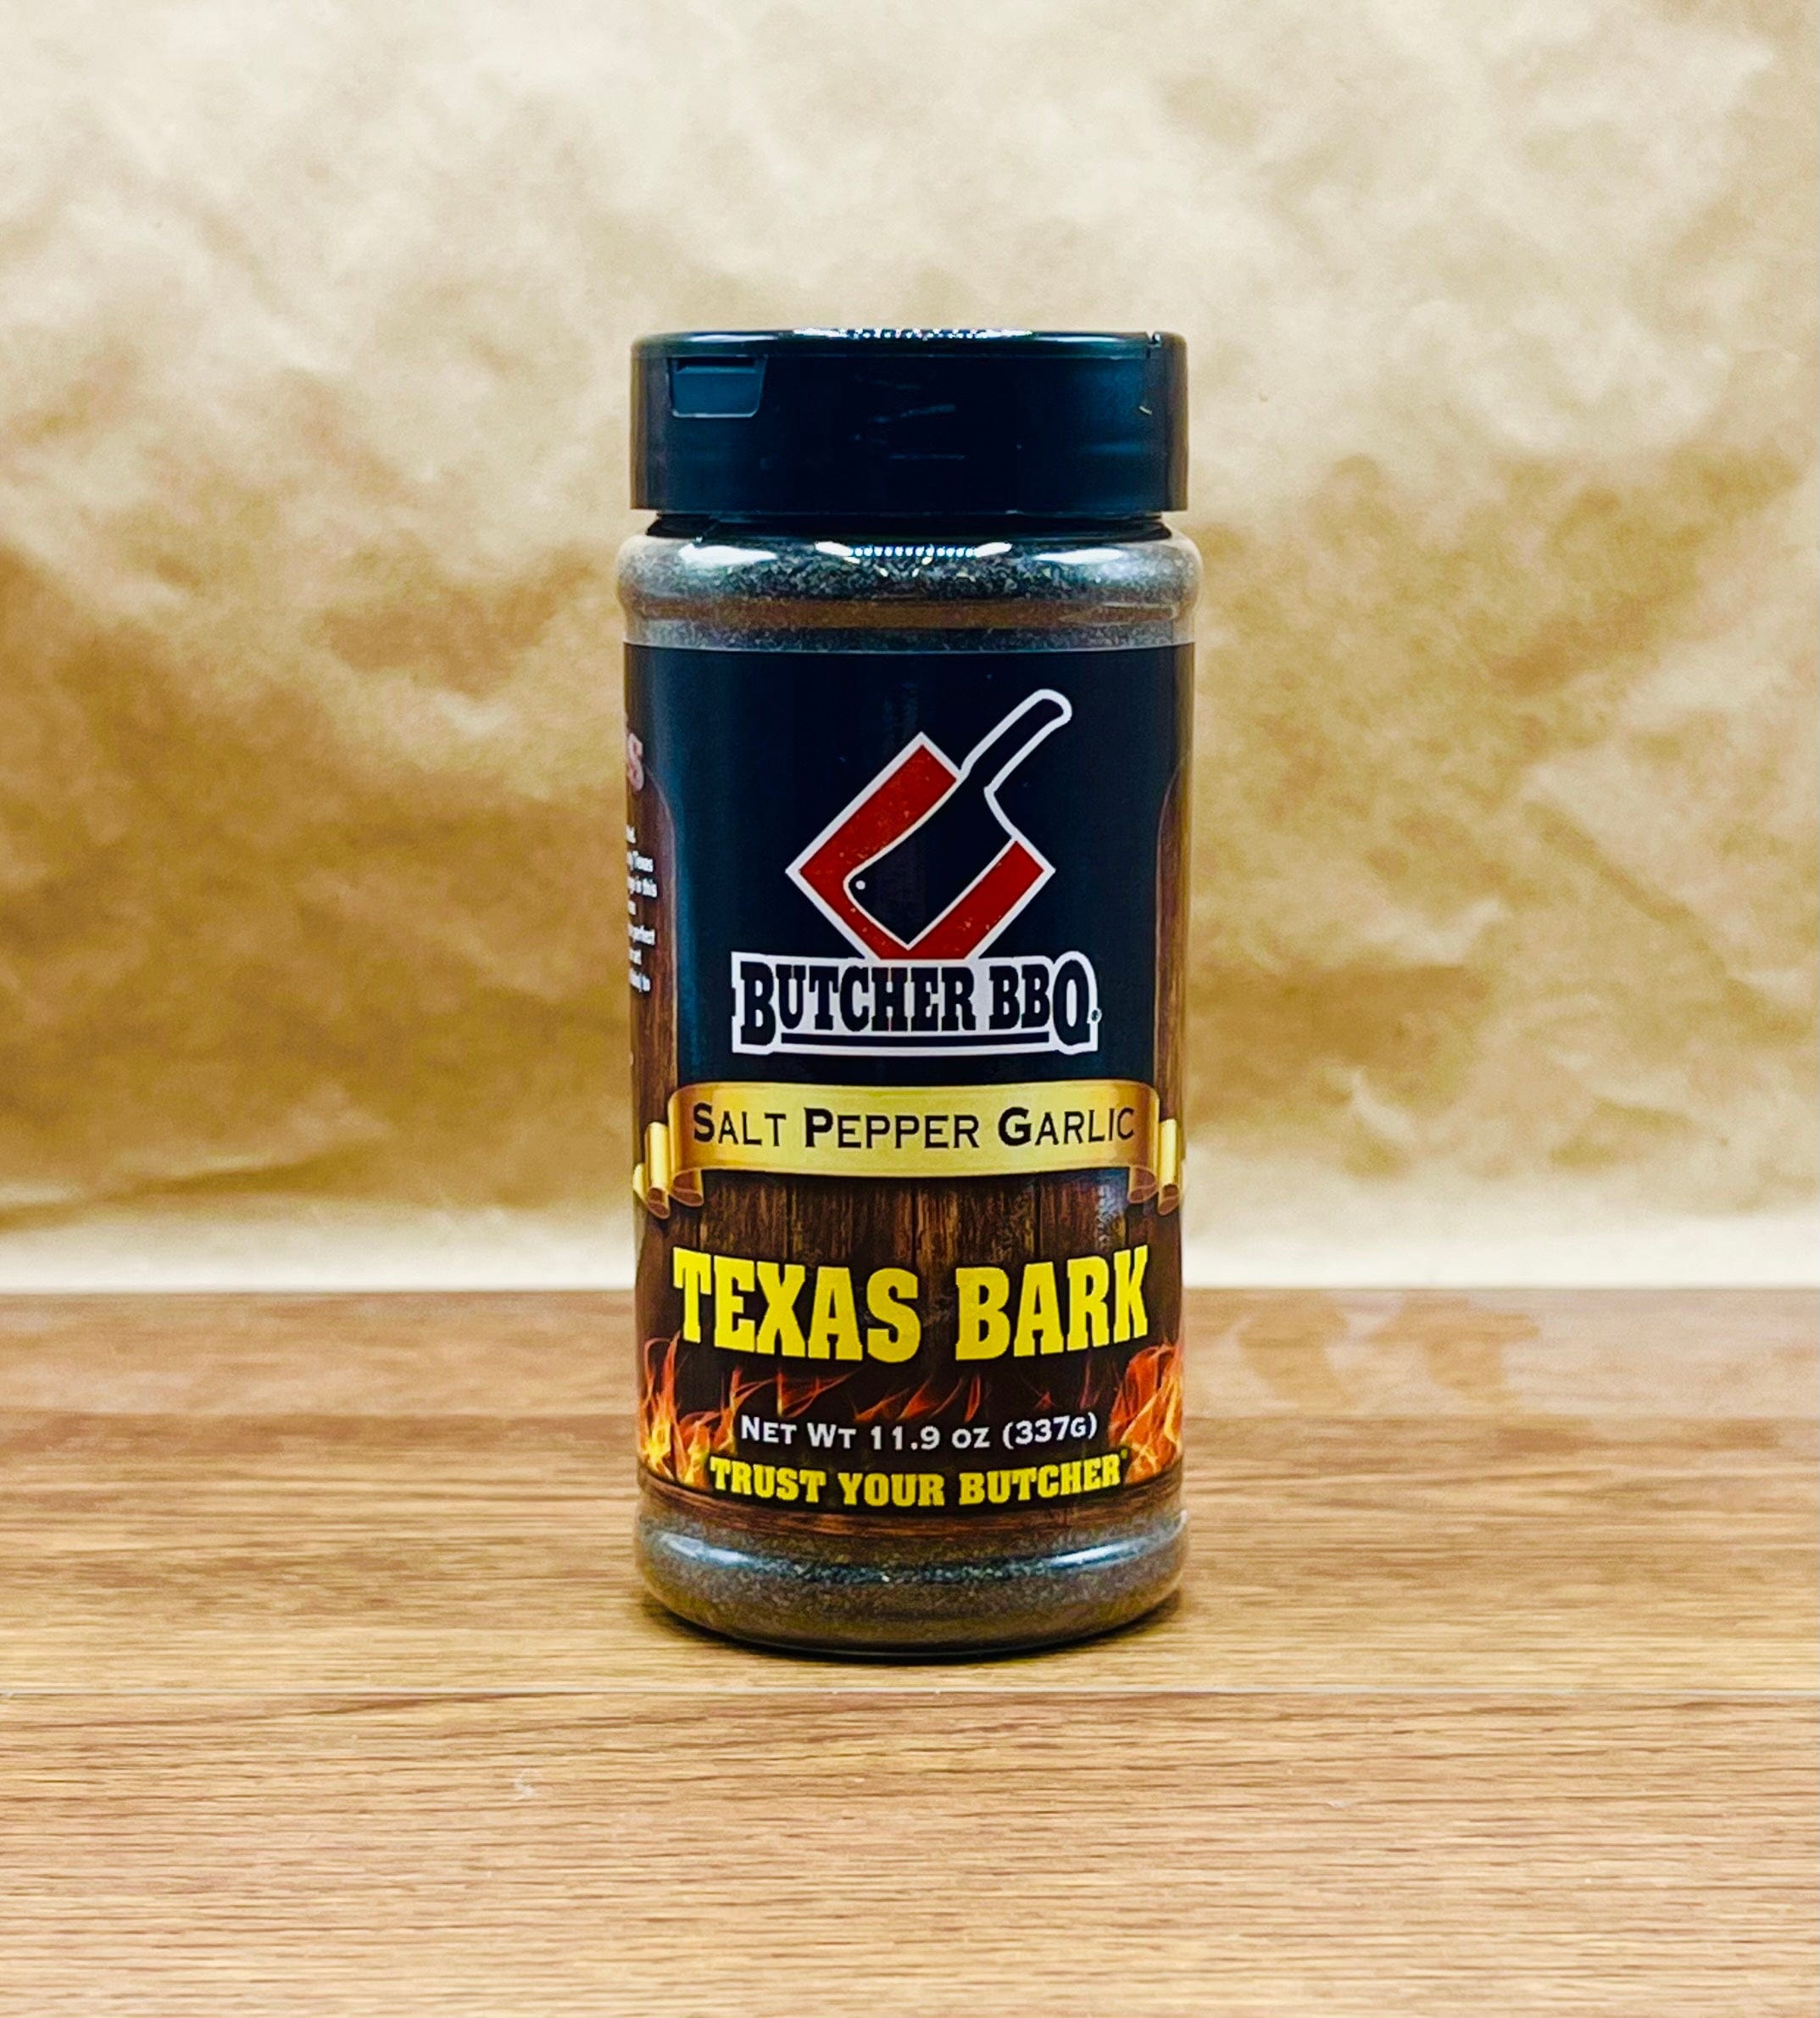 Butcher BBQ BBQ spice and rub Texas Bark - SPG